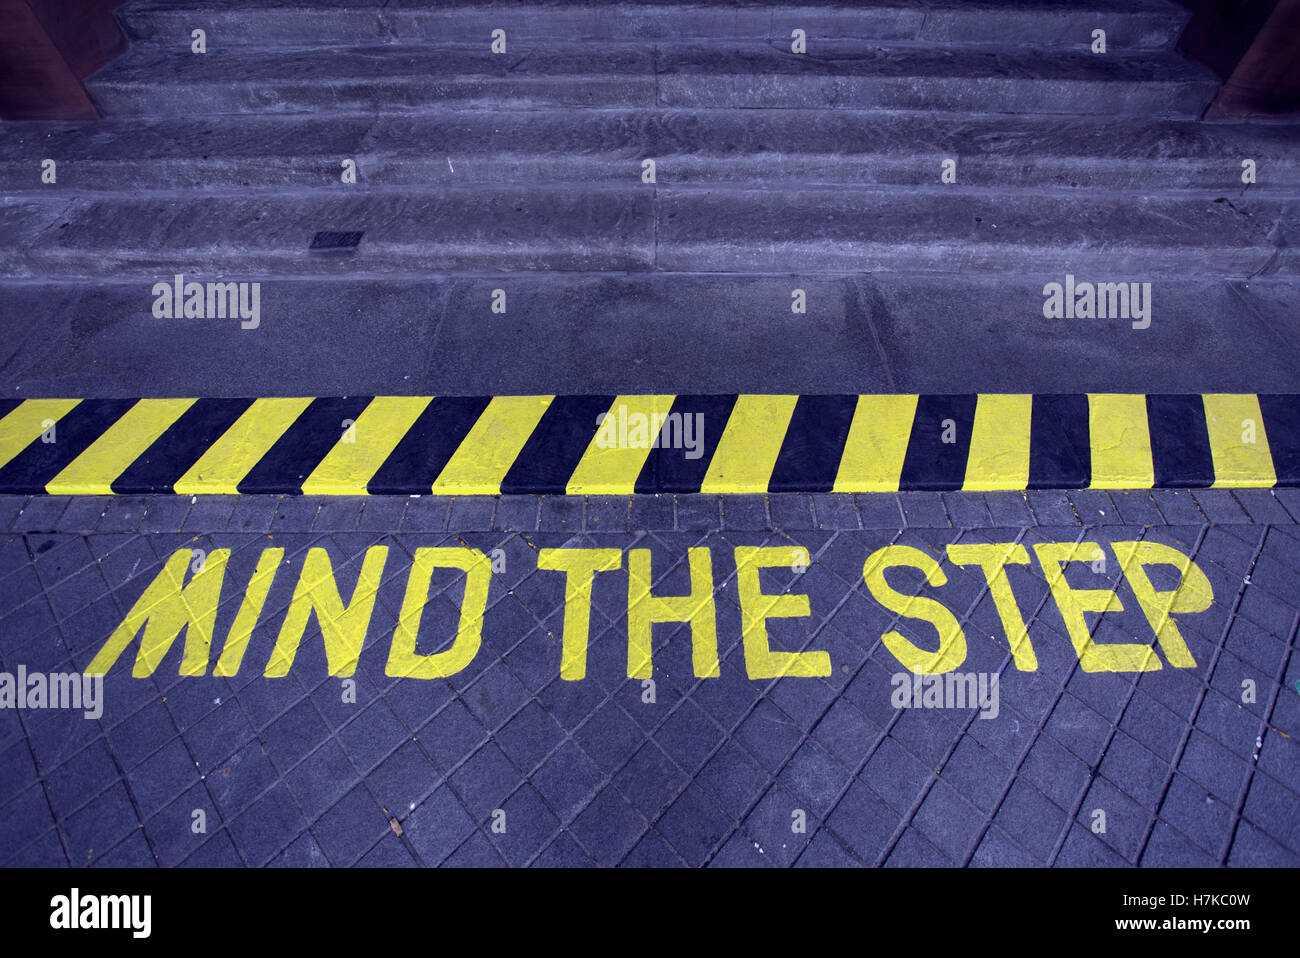 mind the step hazard warning sign Stock Photo